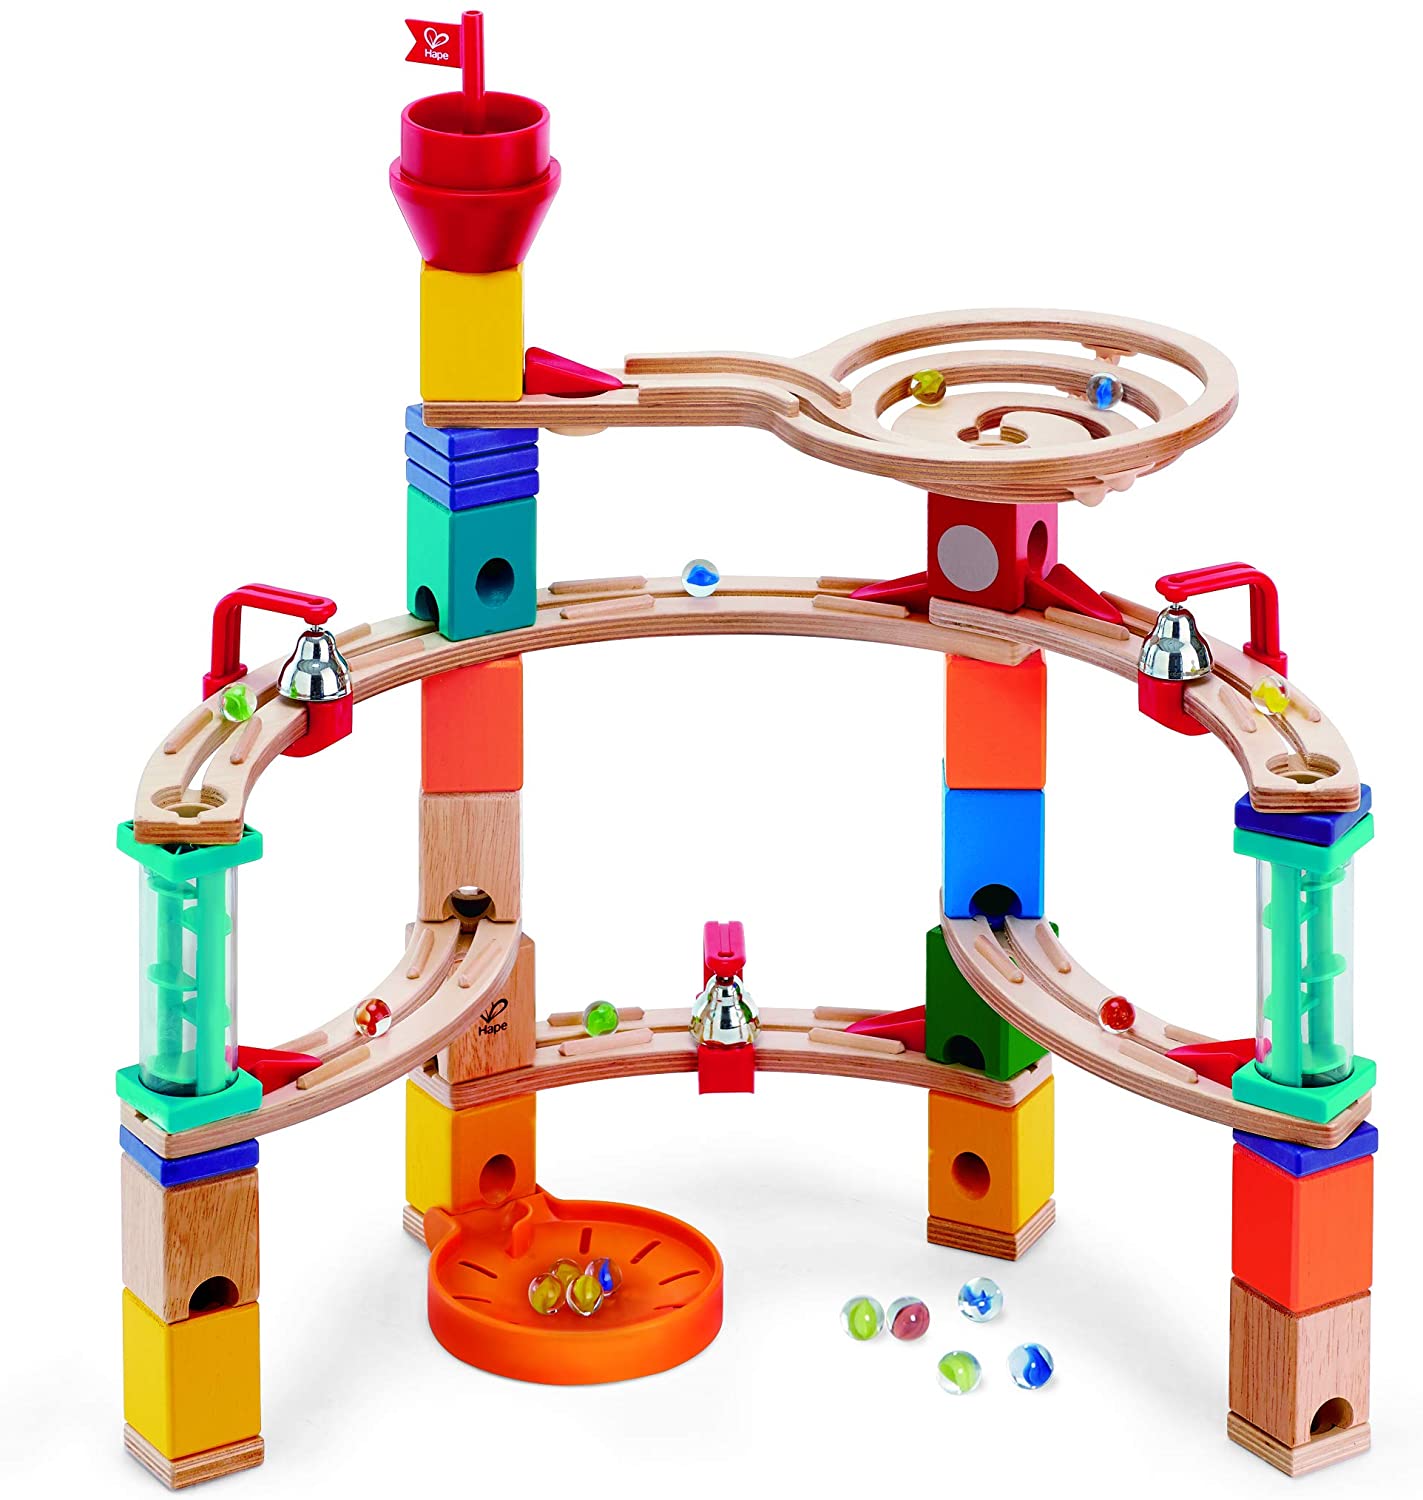 (OPEN BOX) Hape Castle Escape - Quadrilla Wooden Marble Run Blocks - STEM Learning, Building & Development Construction Toy - Counting, Color & Problem Solving for Ages 4+, 101Piece, Multi Color (E6019)